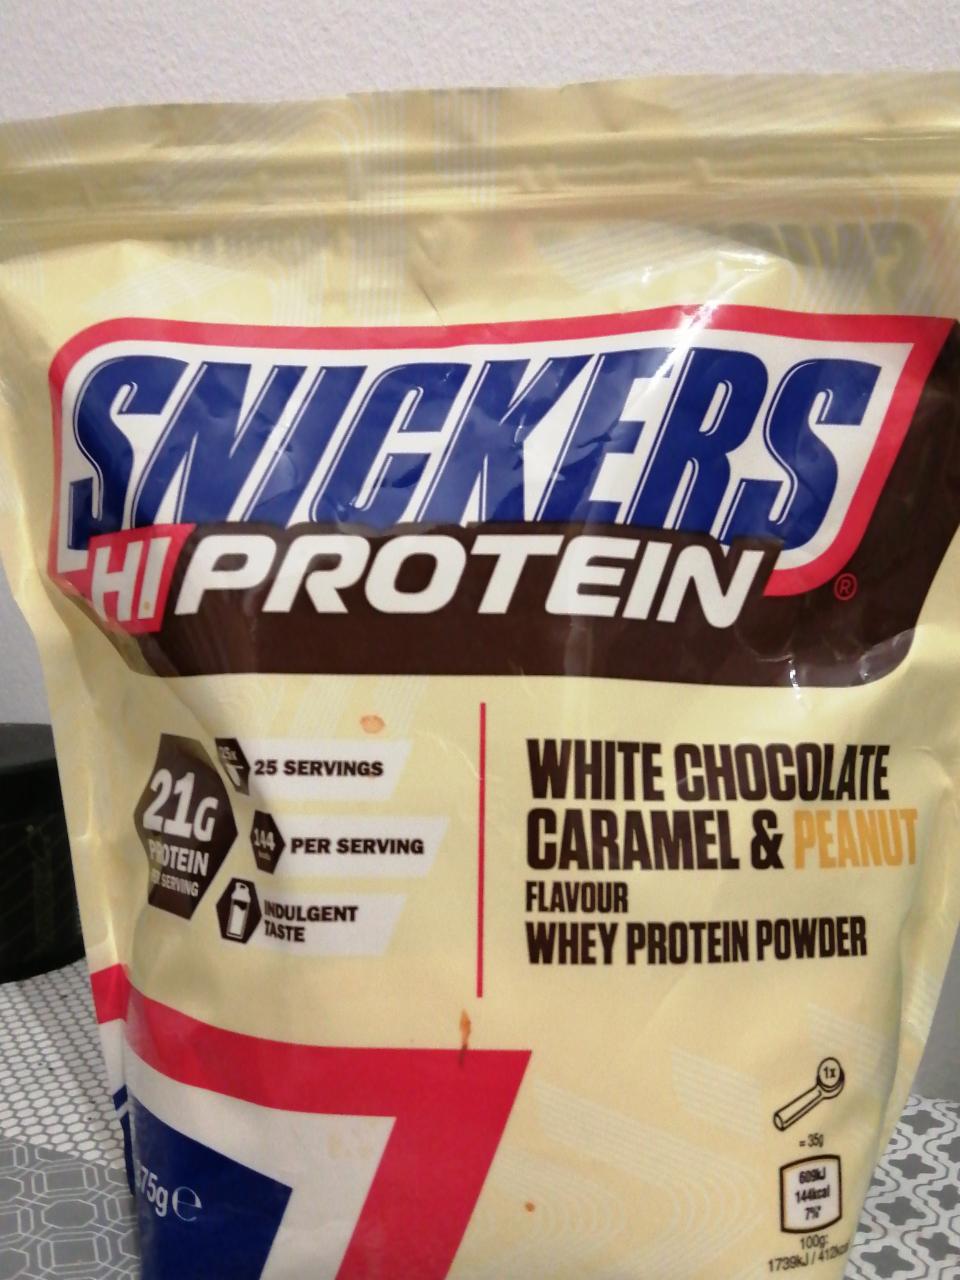 Fotografie - Snickers HiProtein white chocolate caramel & peanut flavour whey protein powder